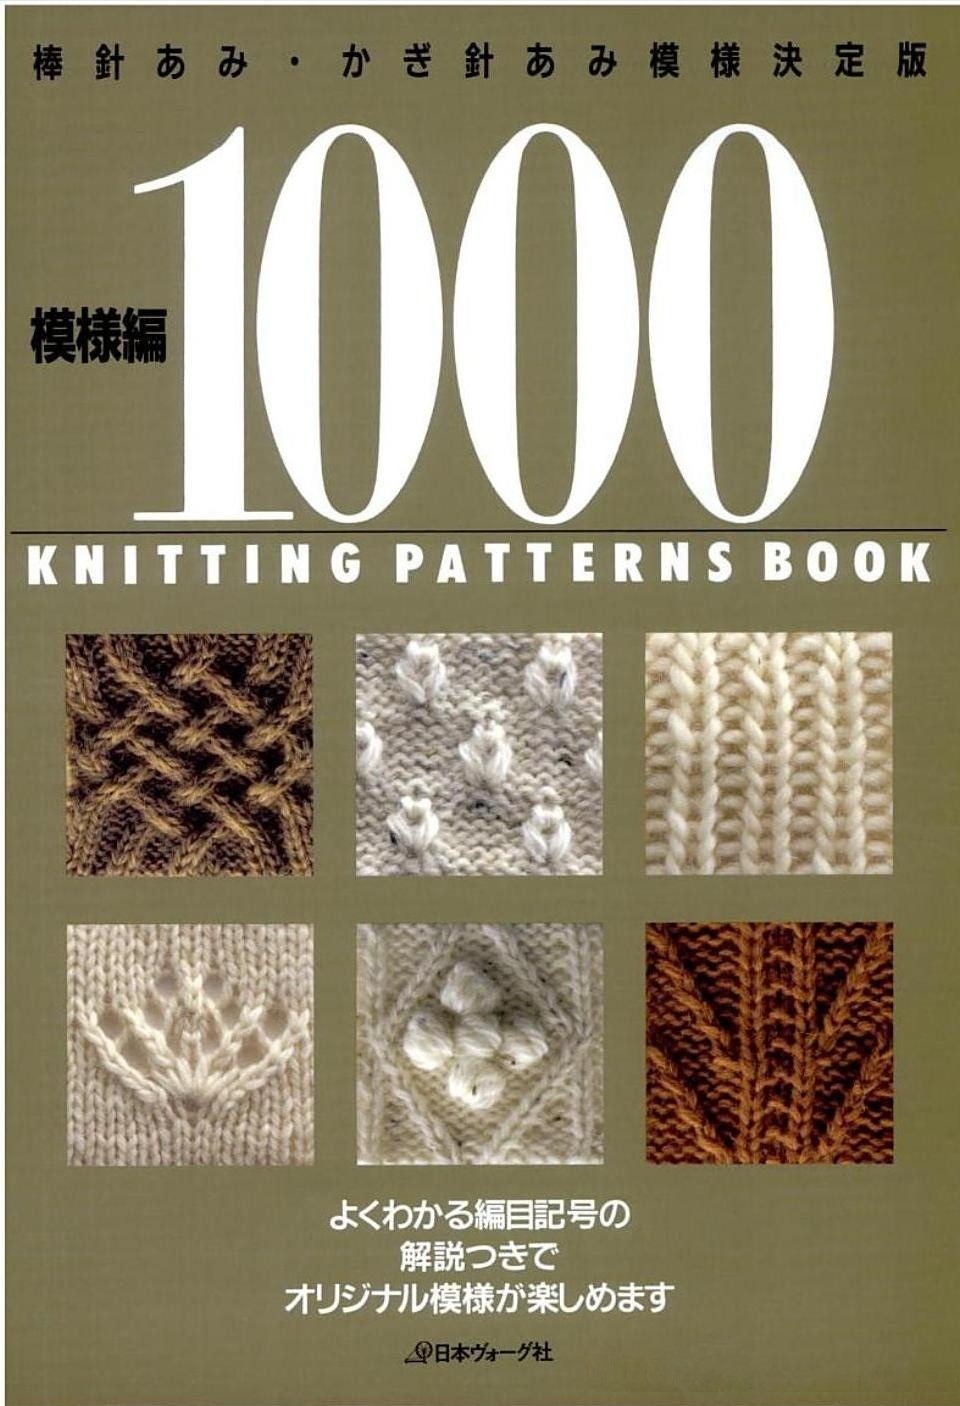 0-Knitting-patterns-book-1000-NV7183.jpg